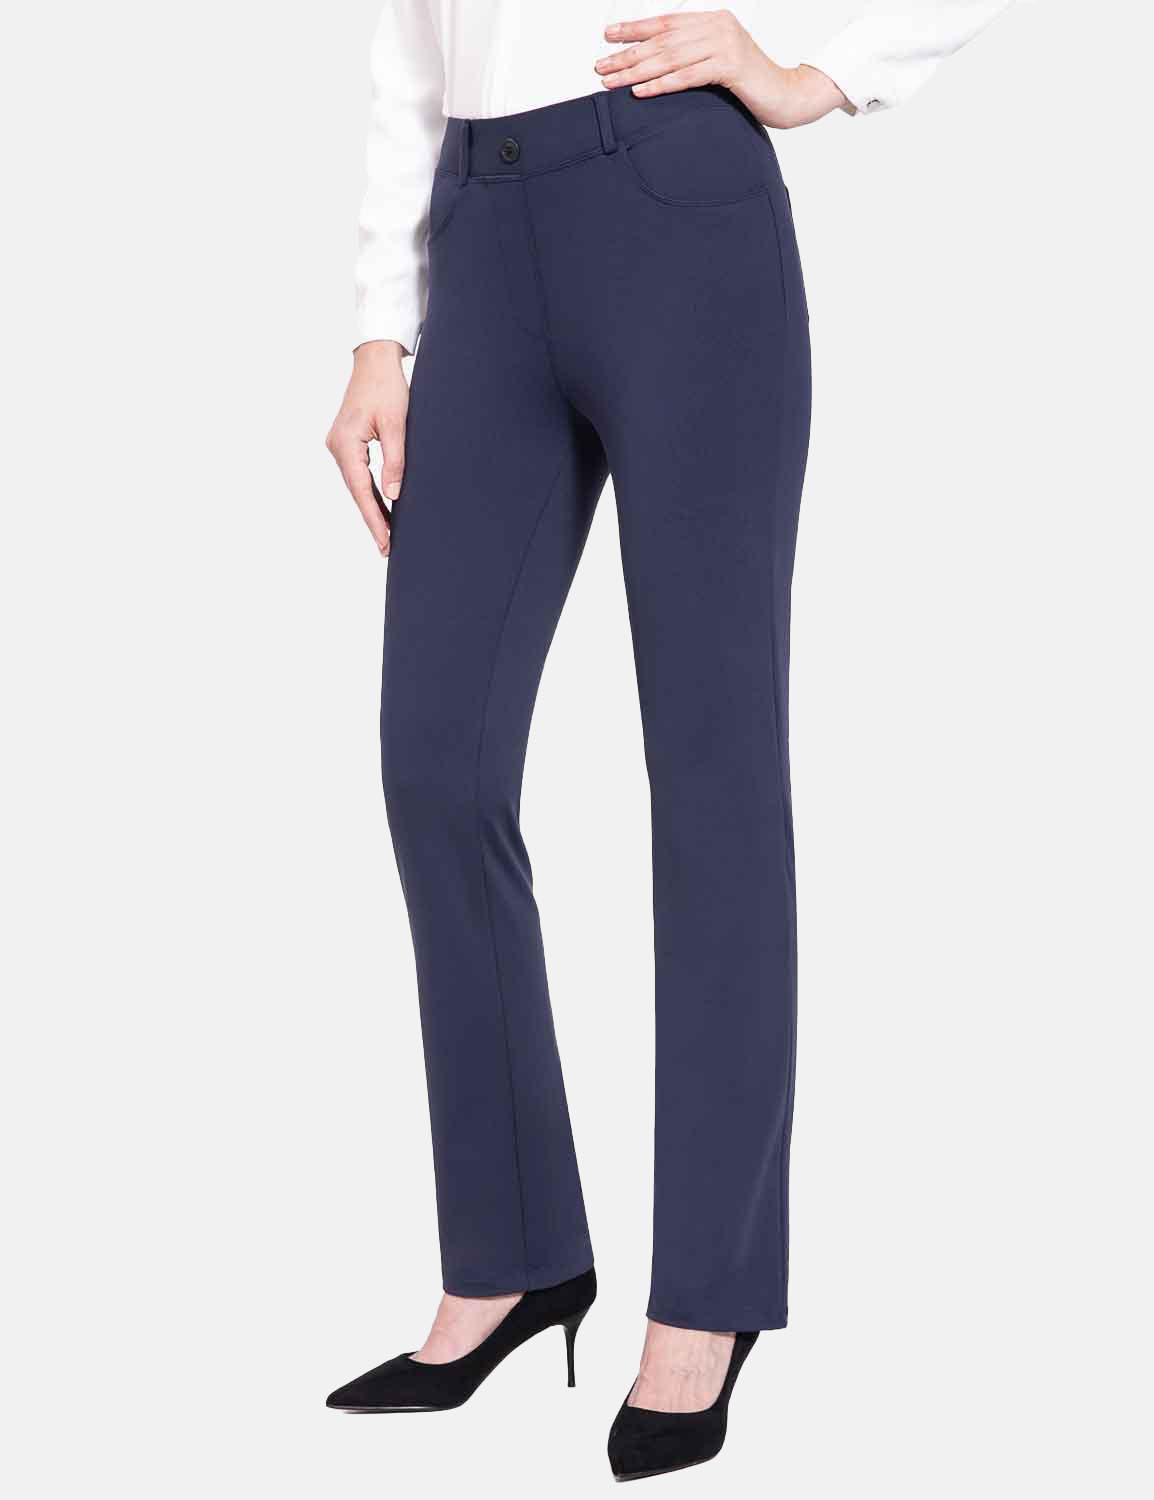 Buy BALEAF Women's 15/17 Capri Yoga Pants Cotton Drawstring Workout  Sweatpants Summer Causal Lounge Pants with Pockets, Grey, Medium at